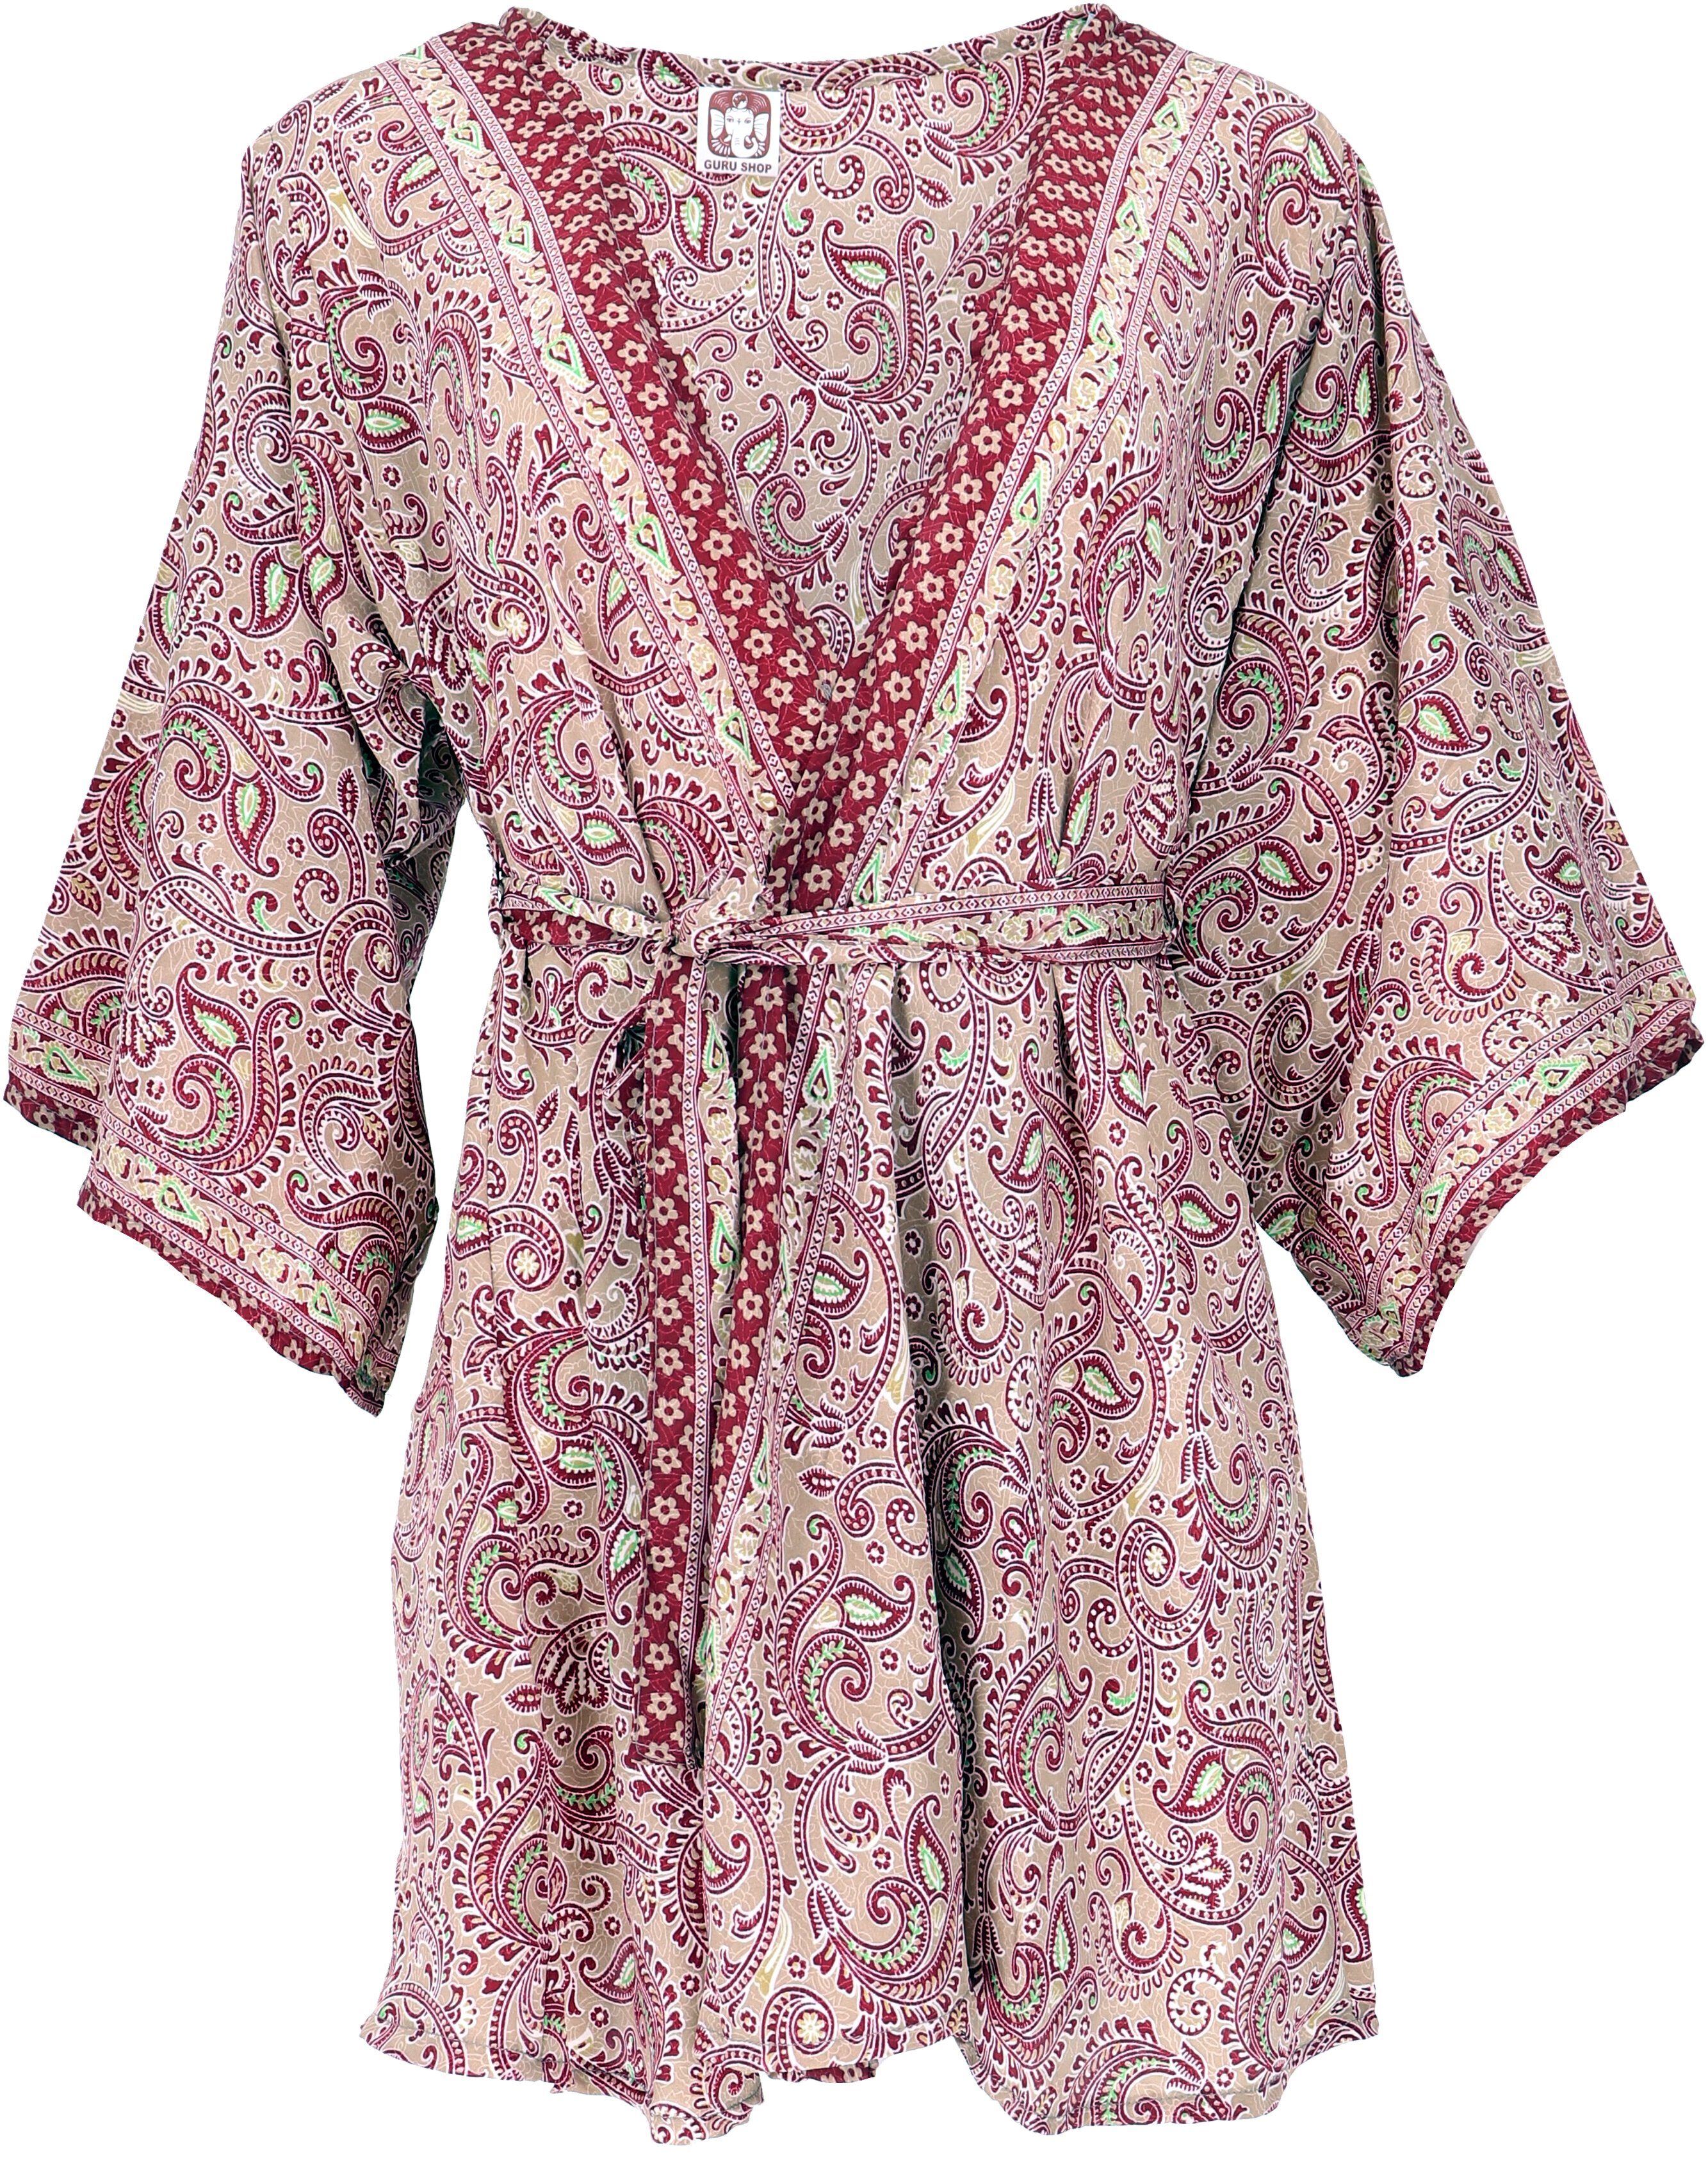 Freiraum Guru-Shop Kimono Kimonojäckchen, Kimonokleid.., Boho Bekleidung beige/bordeaux alternative kurzer Kimono